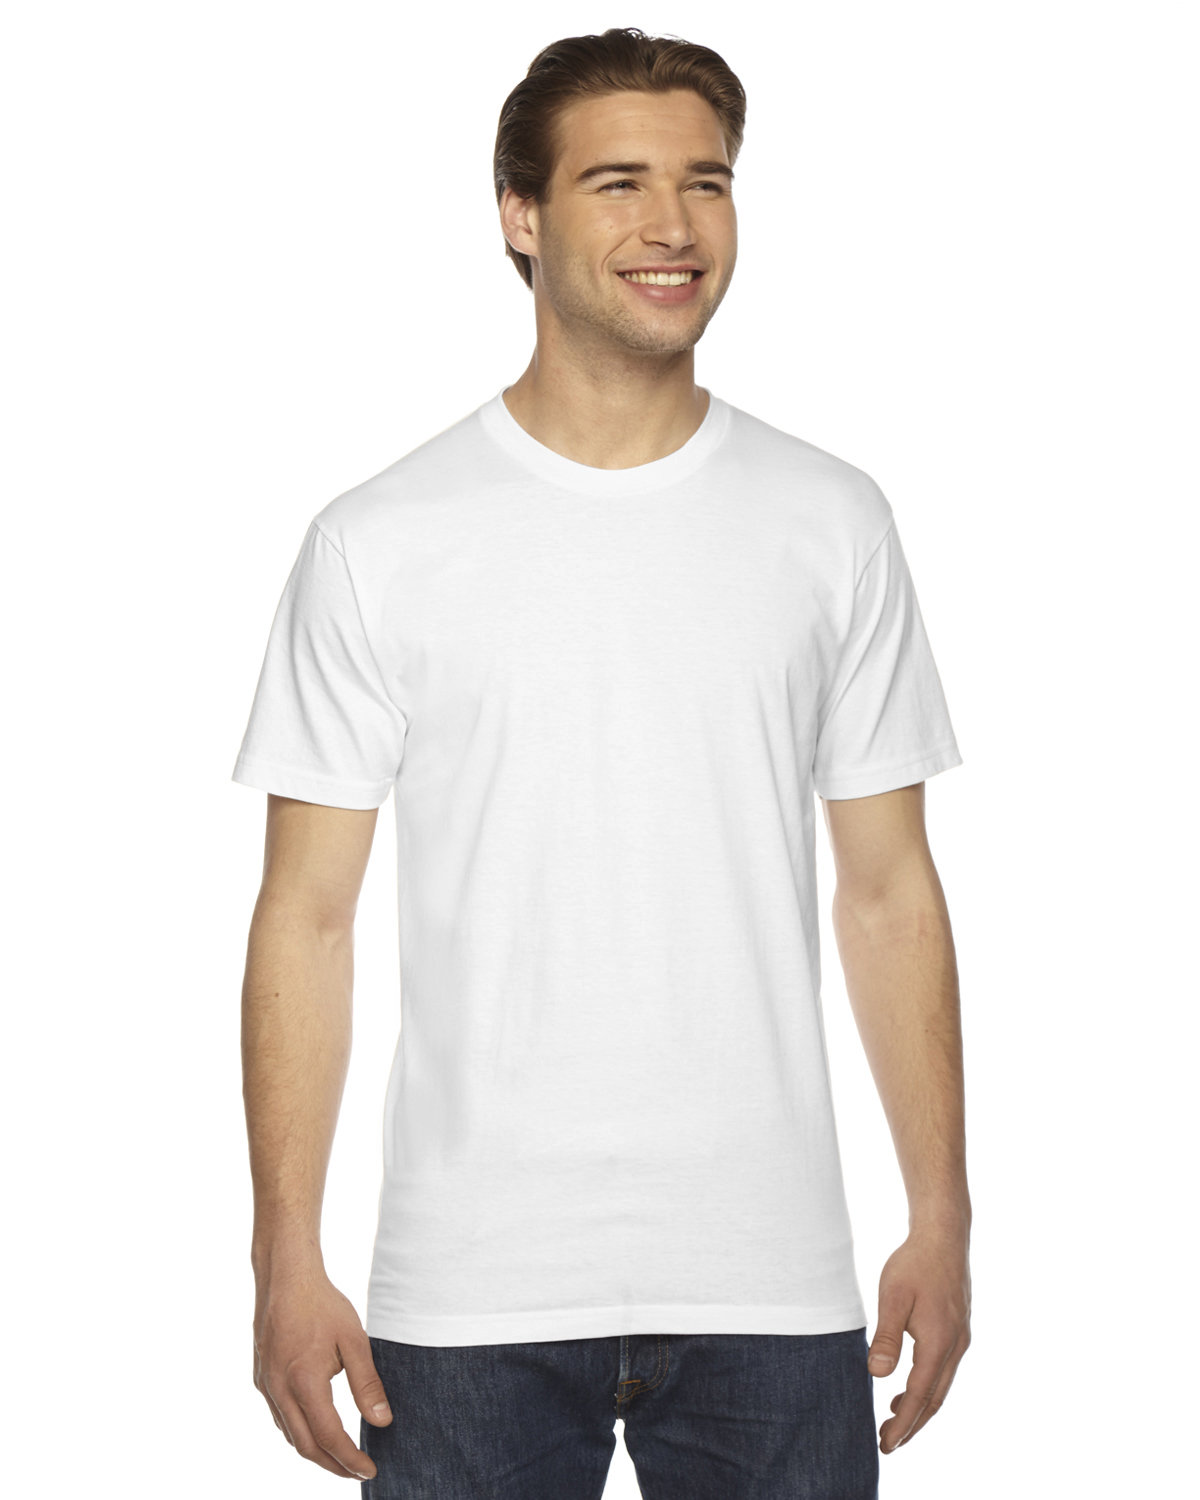 American Apparel Unisex Fine Jersey Short-Sleeve T-Shirt WHITE 